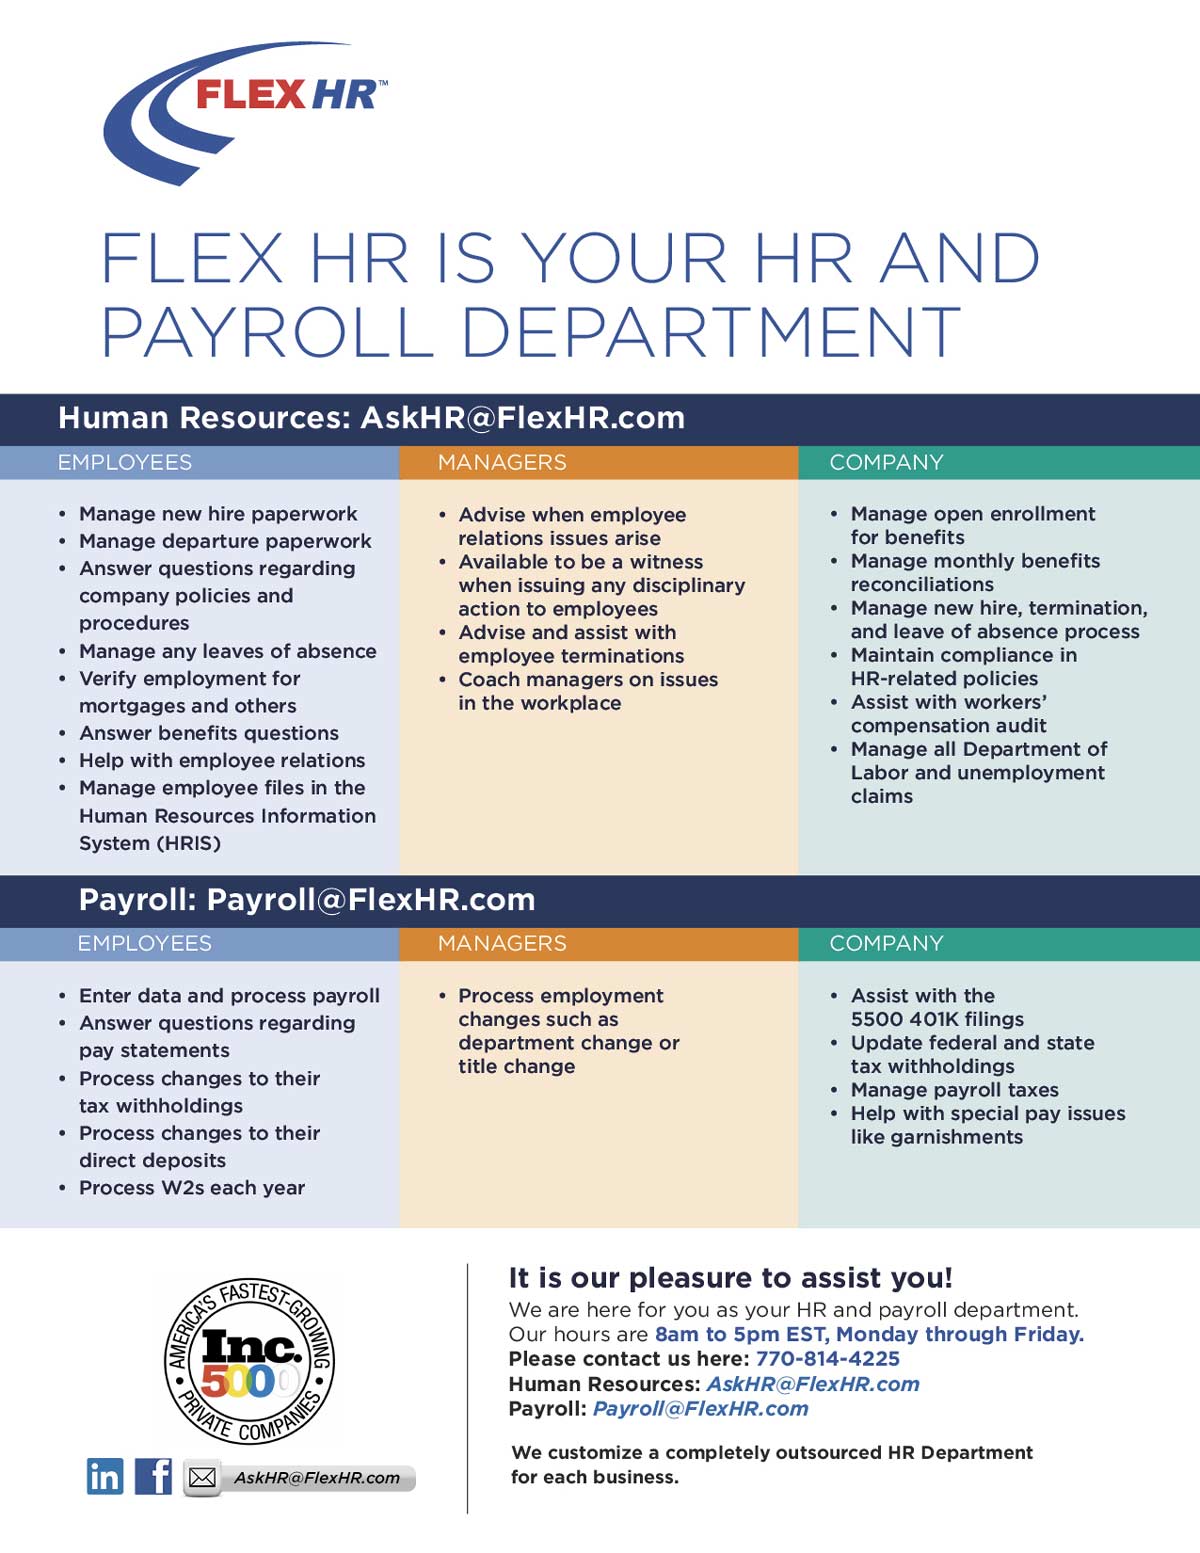 Flex HR and Payroll Department